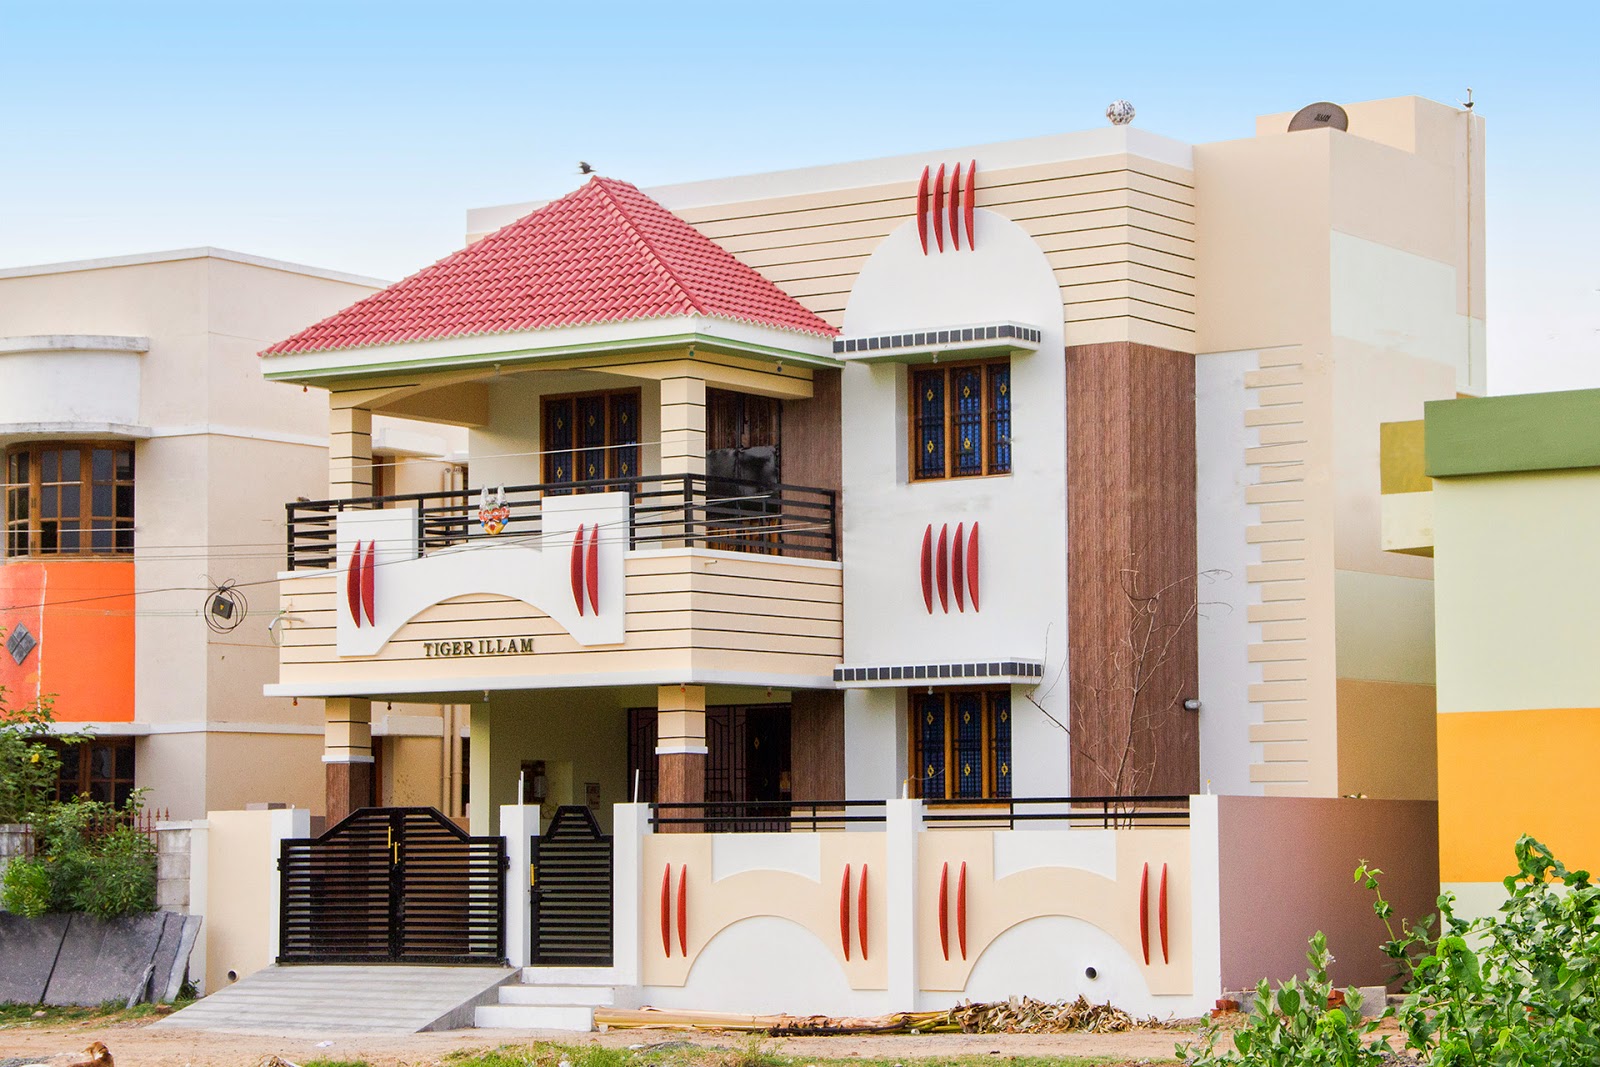 India villa elevation in 3440 sq.feet - Kerala home design and floor